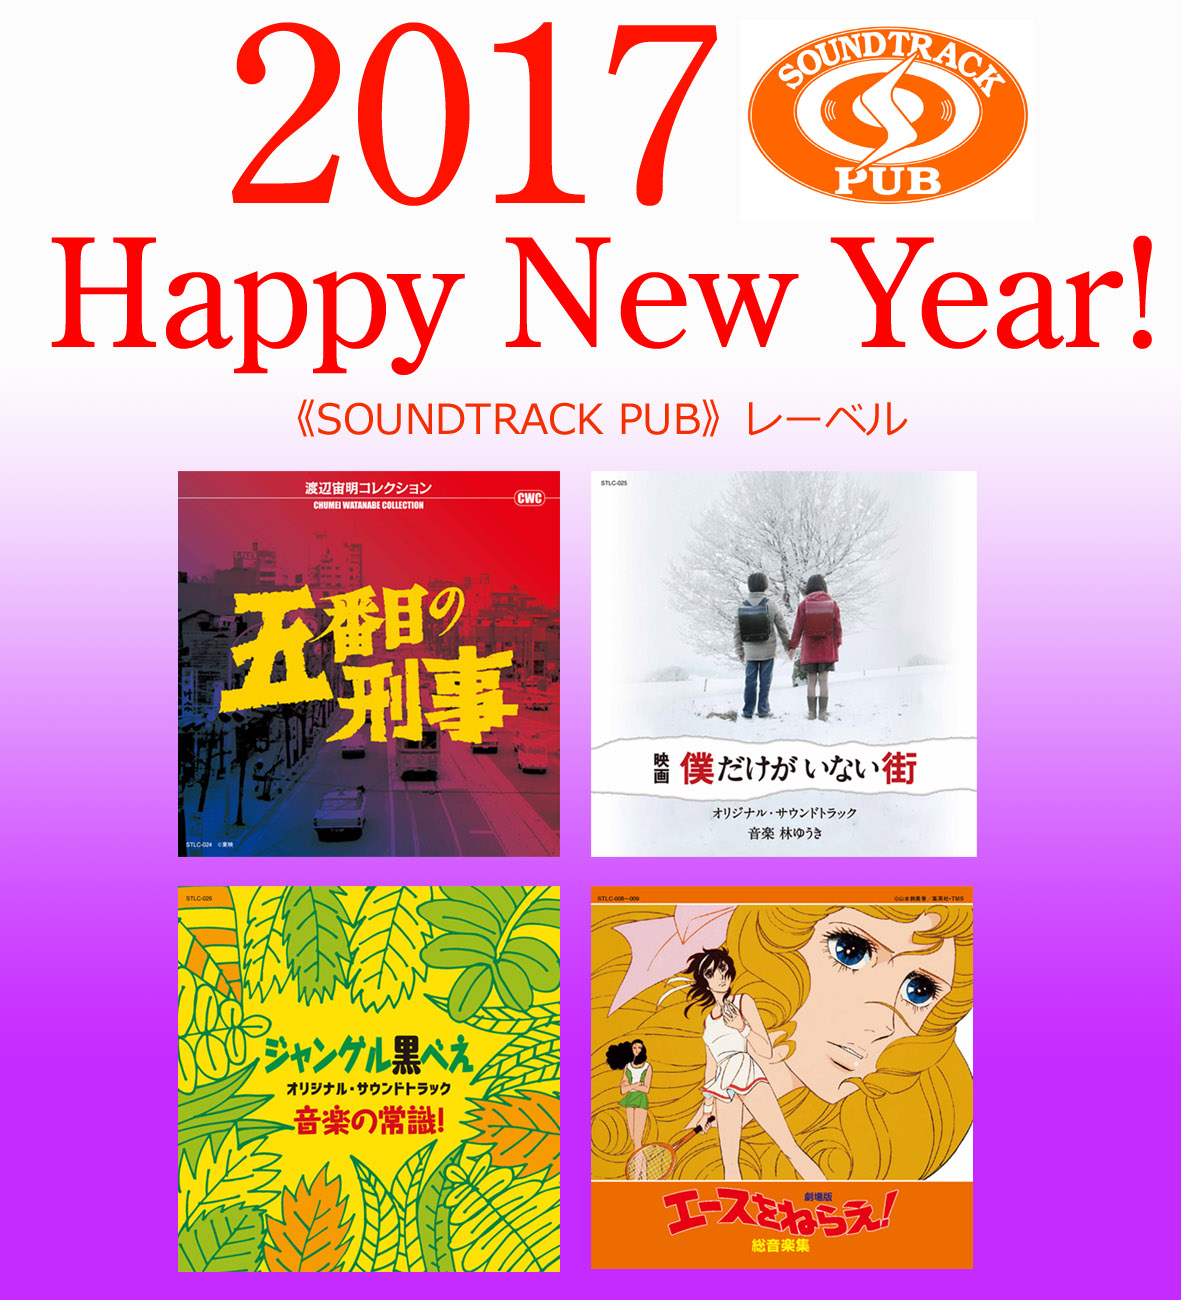 2017年賀SoundtracPub.jpg